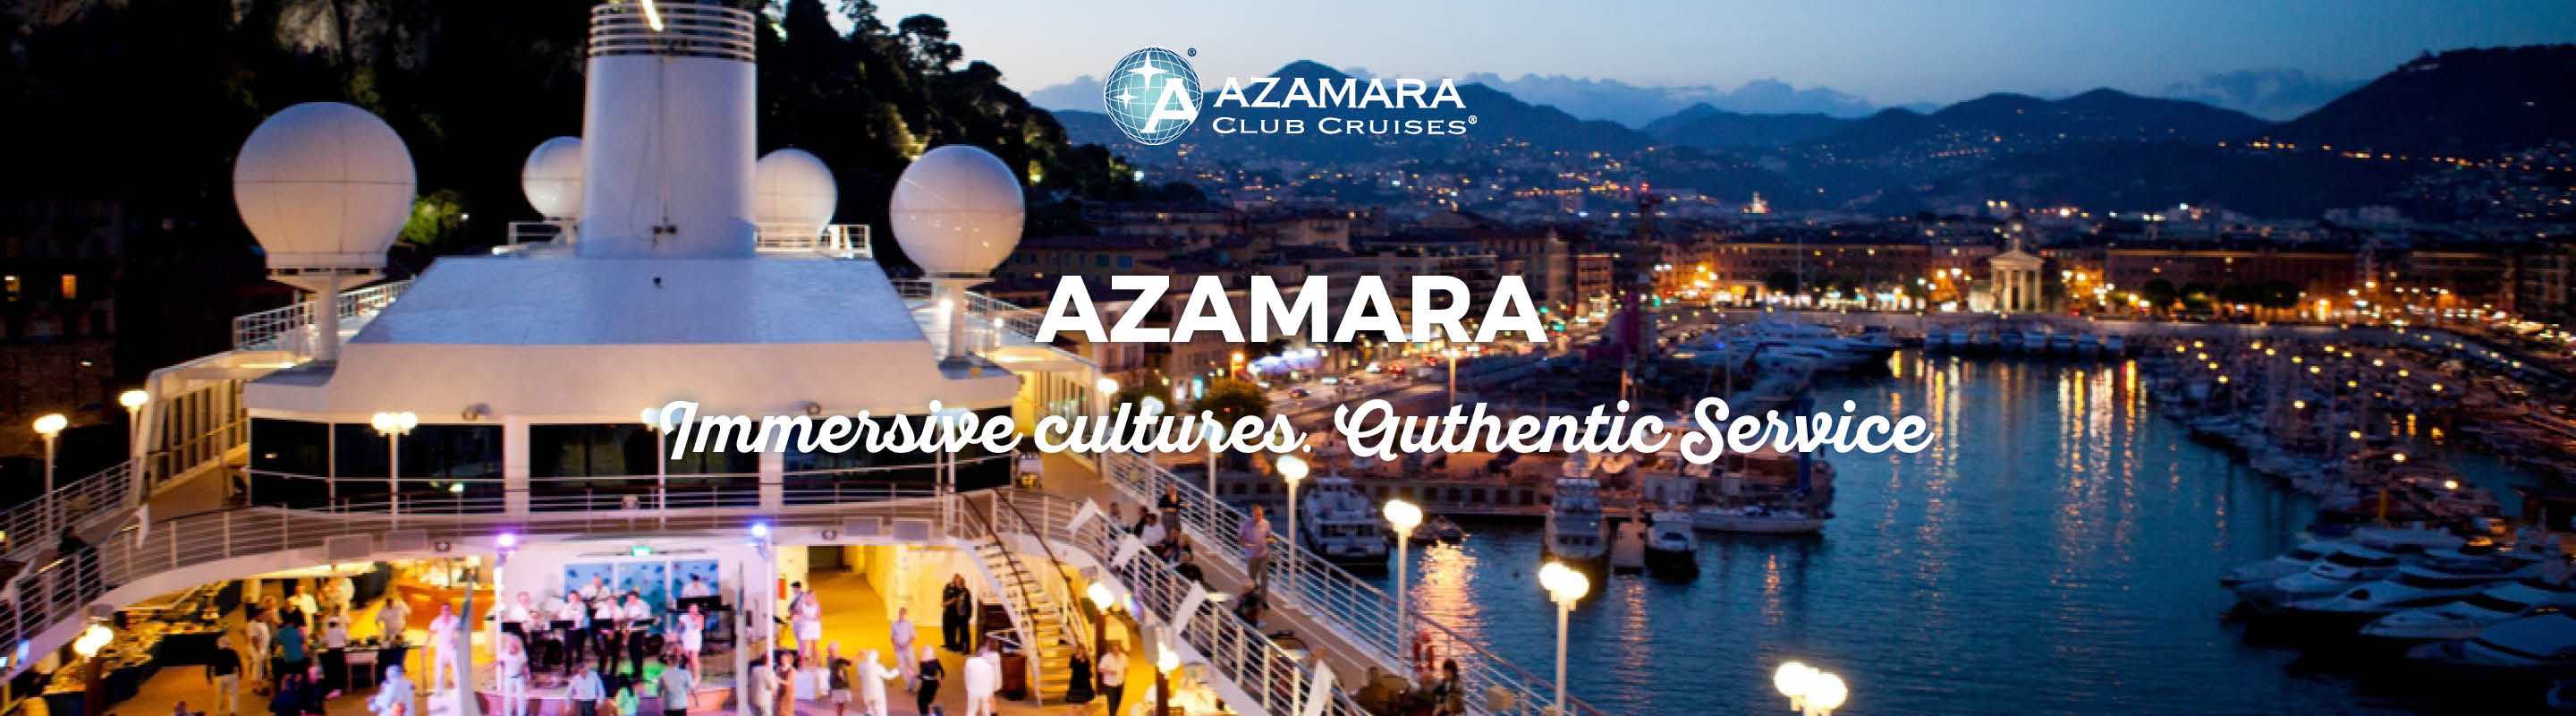 azamara-cruise-offers.jpg